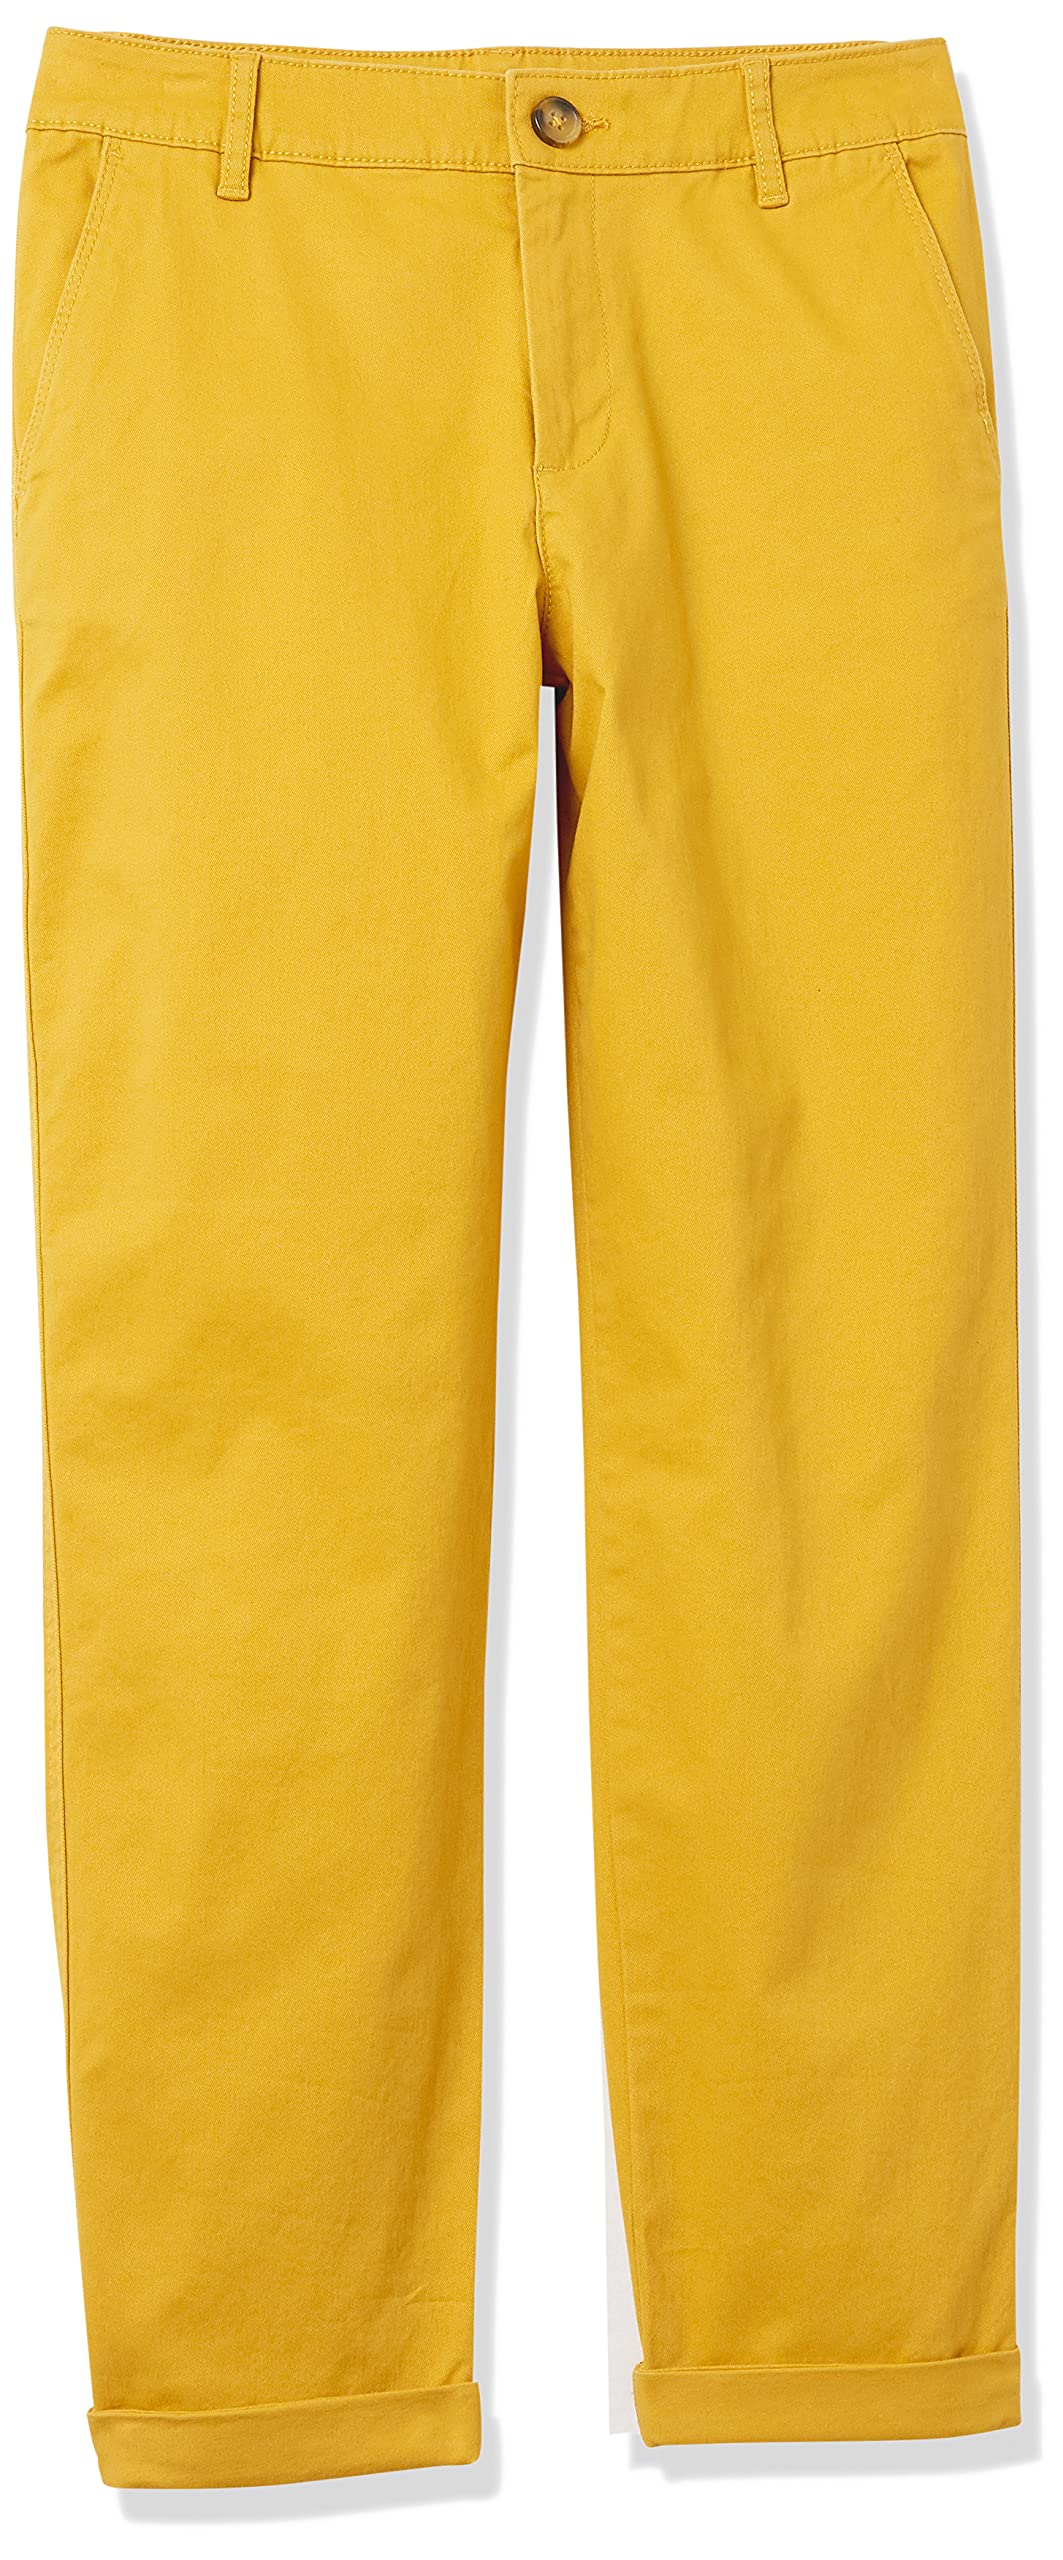 Amazon Essentials Women's Mid-Rise Slim-Fit Cropped Tapered Leg Khaki Pant